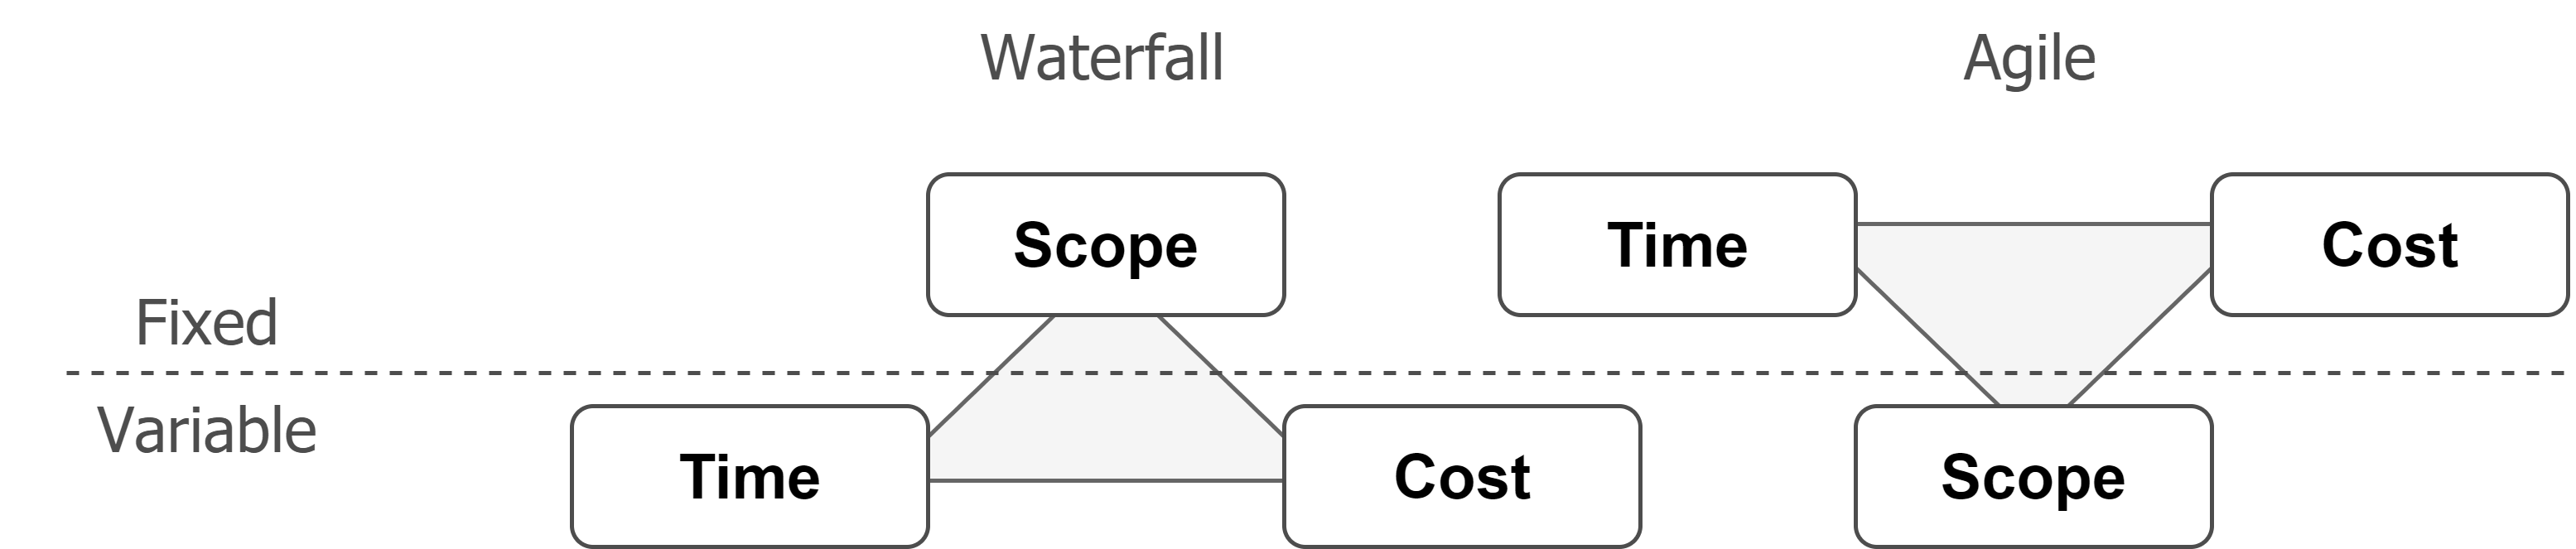 Agile vs. Waterfall Triple Constraints